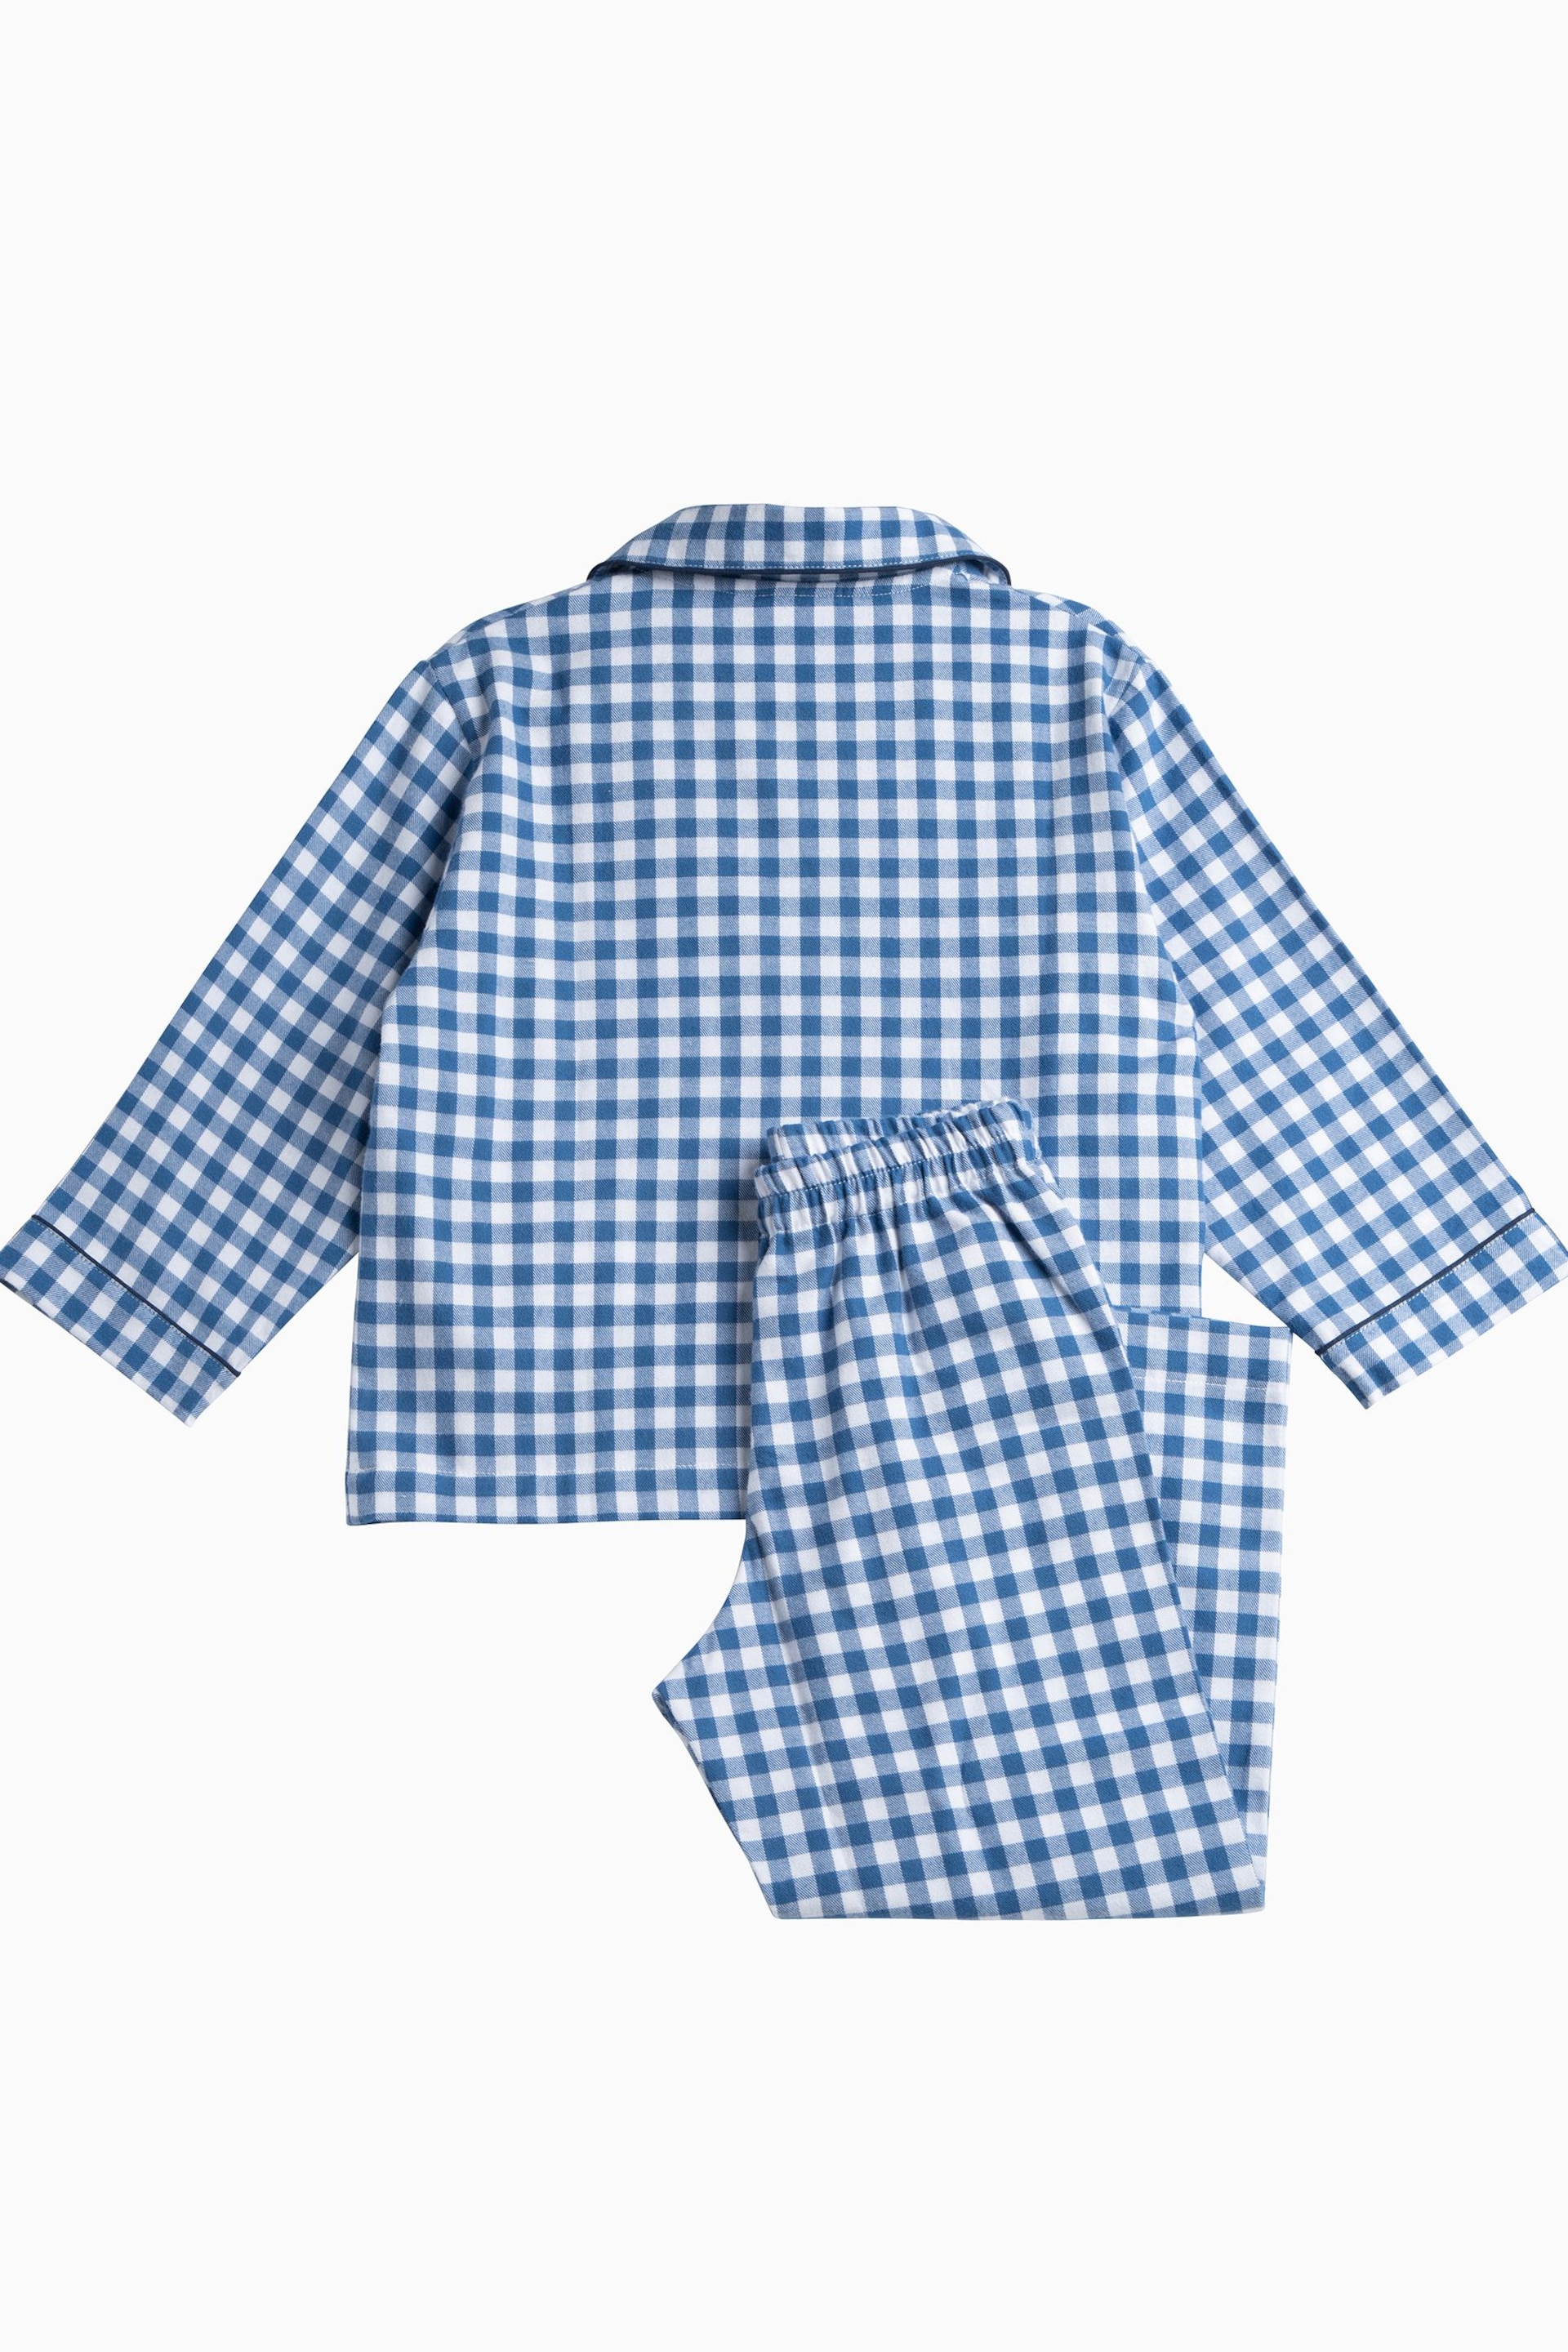 Trotters London Denim Blue Gingham Henry Car Cotton Pyjamas - Image 3 of 4